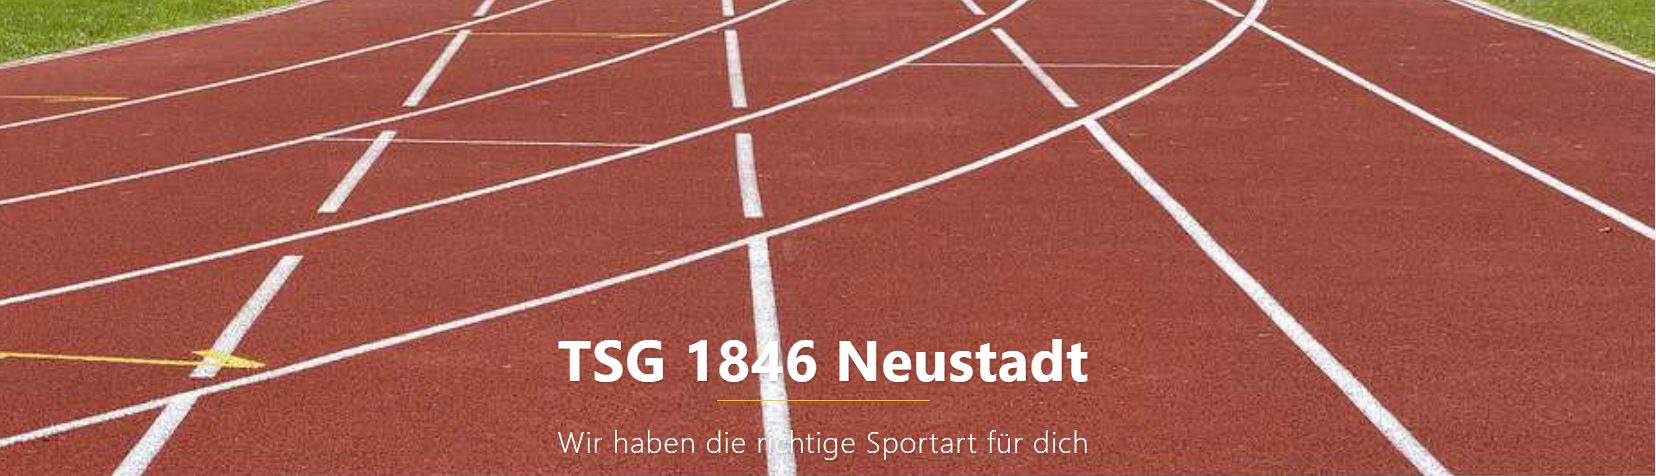 TSG Neustadt Leichtathletik Title Image